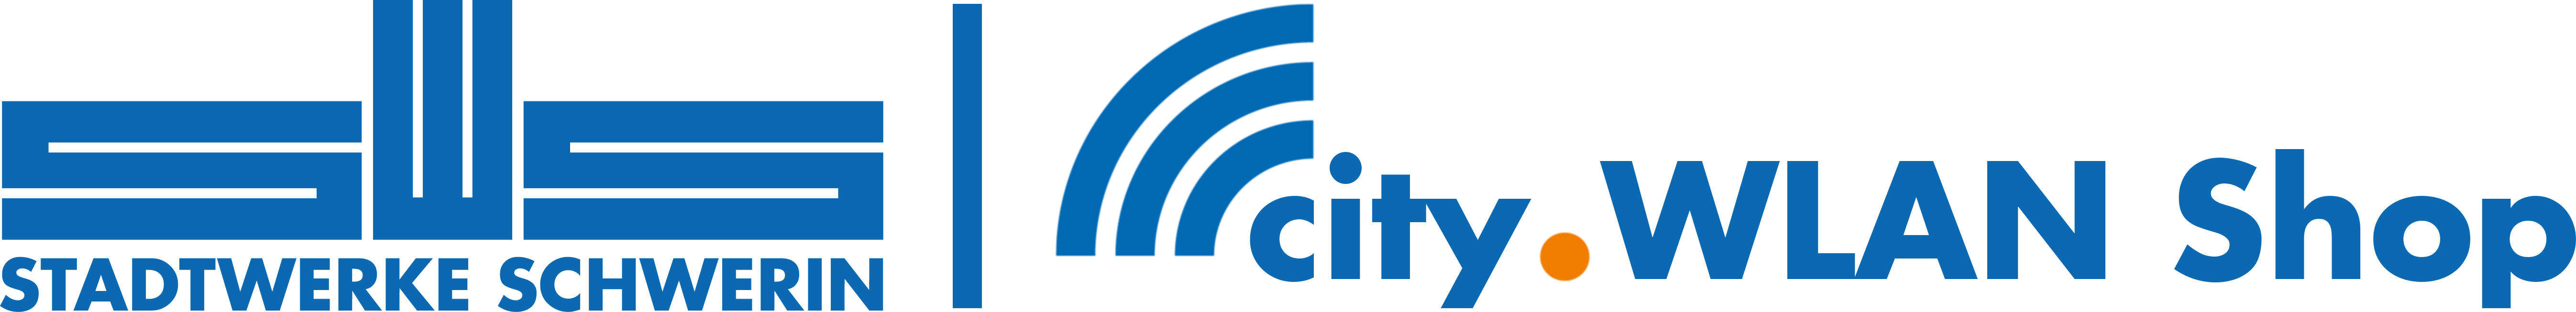 city.WLAN Shop | Stadtwerke Schwerin-Logo